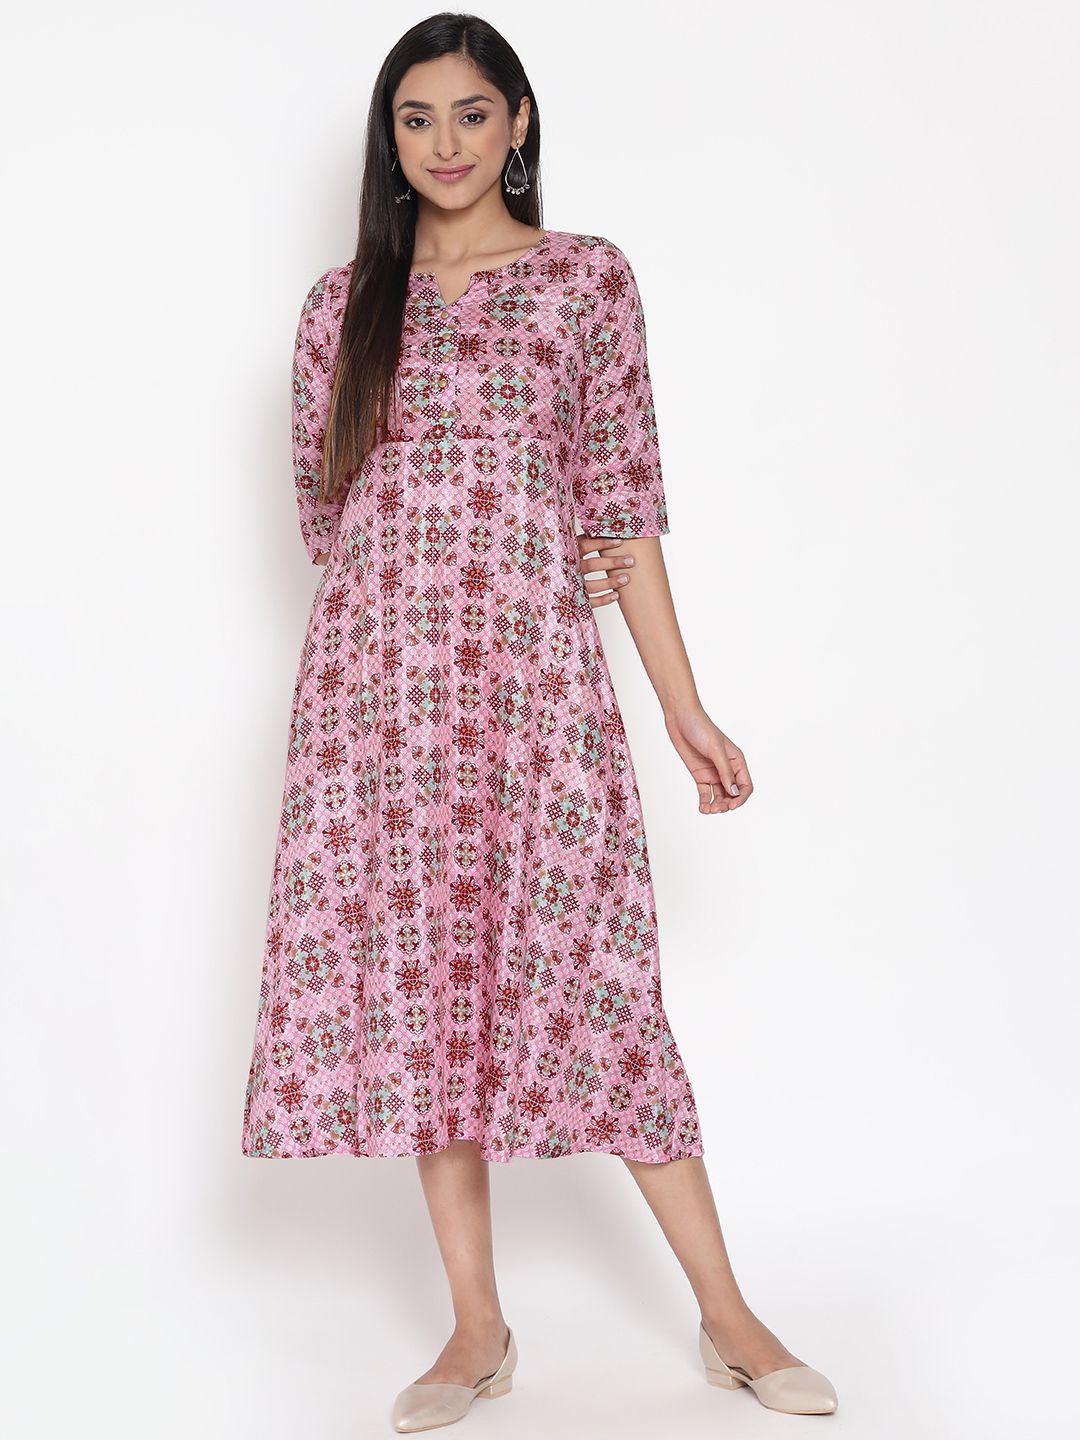 AURELIA Pink Floral Ethnic A-Line Midi Dress Price in India